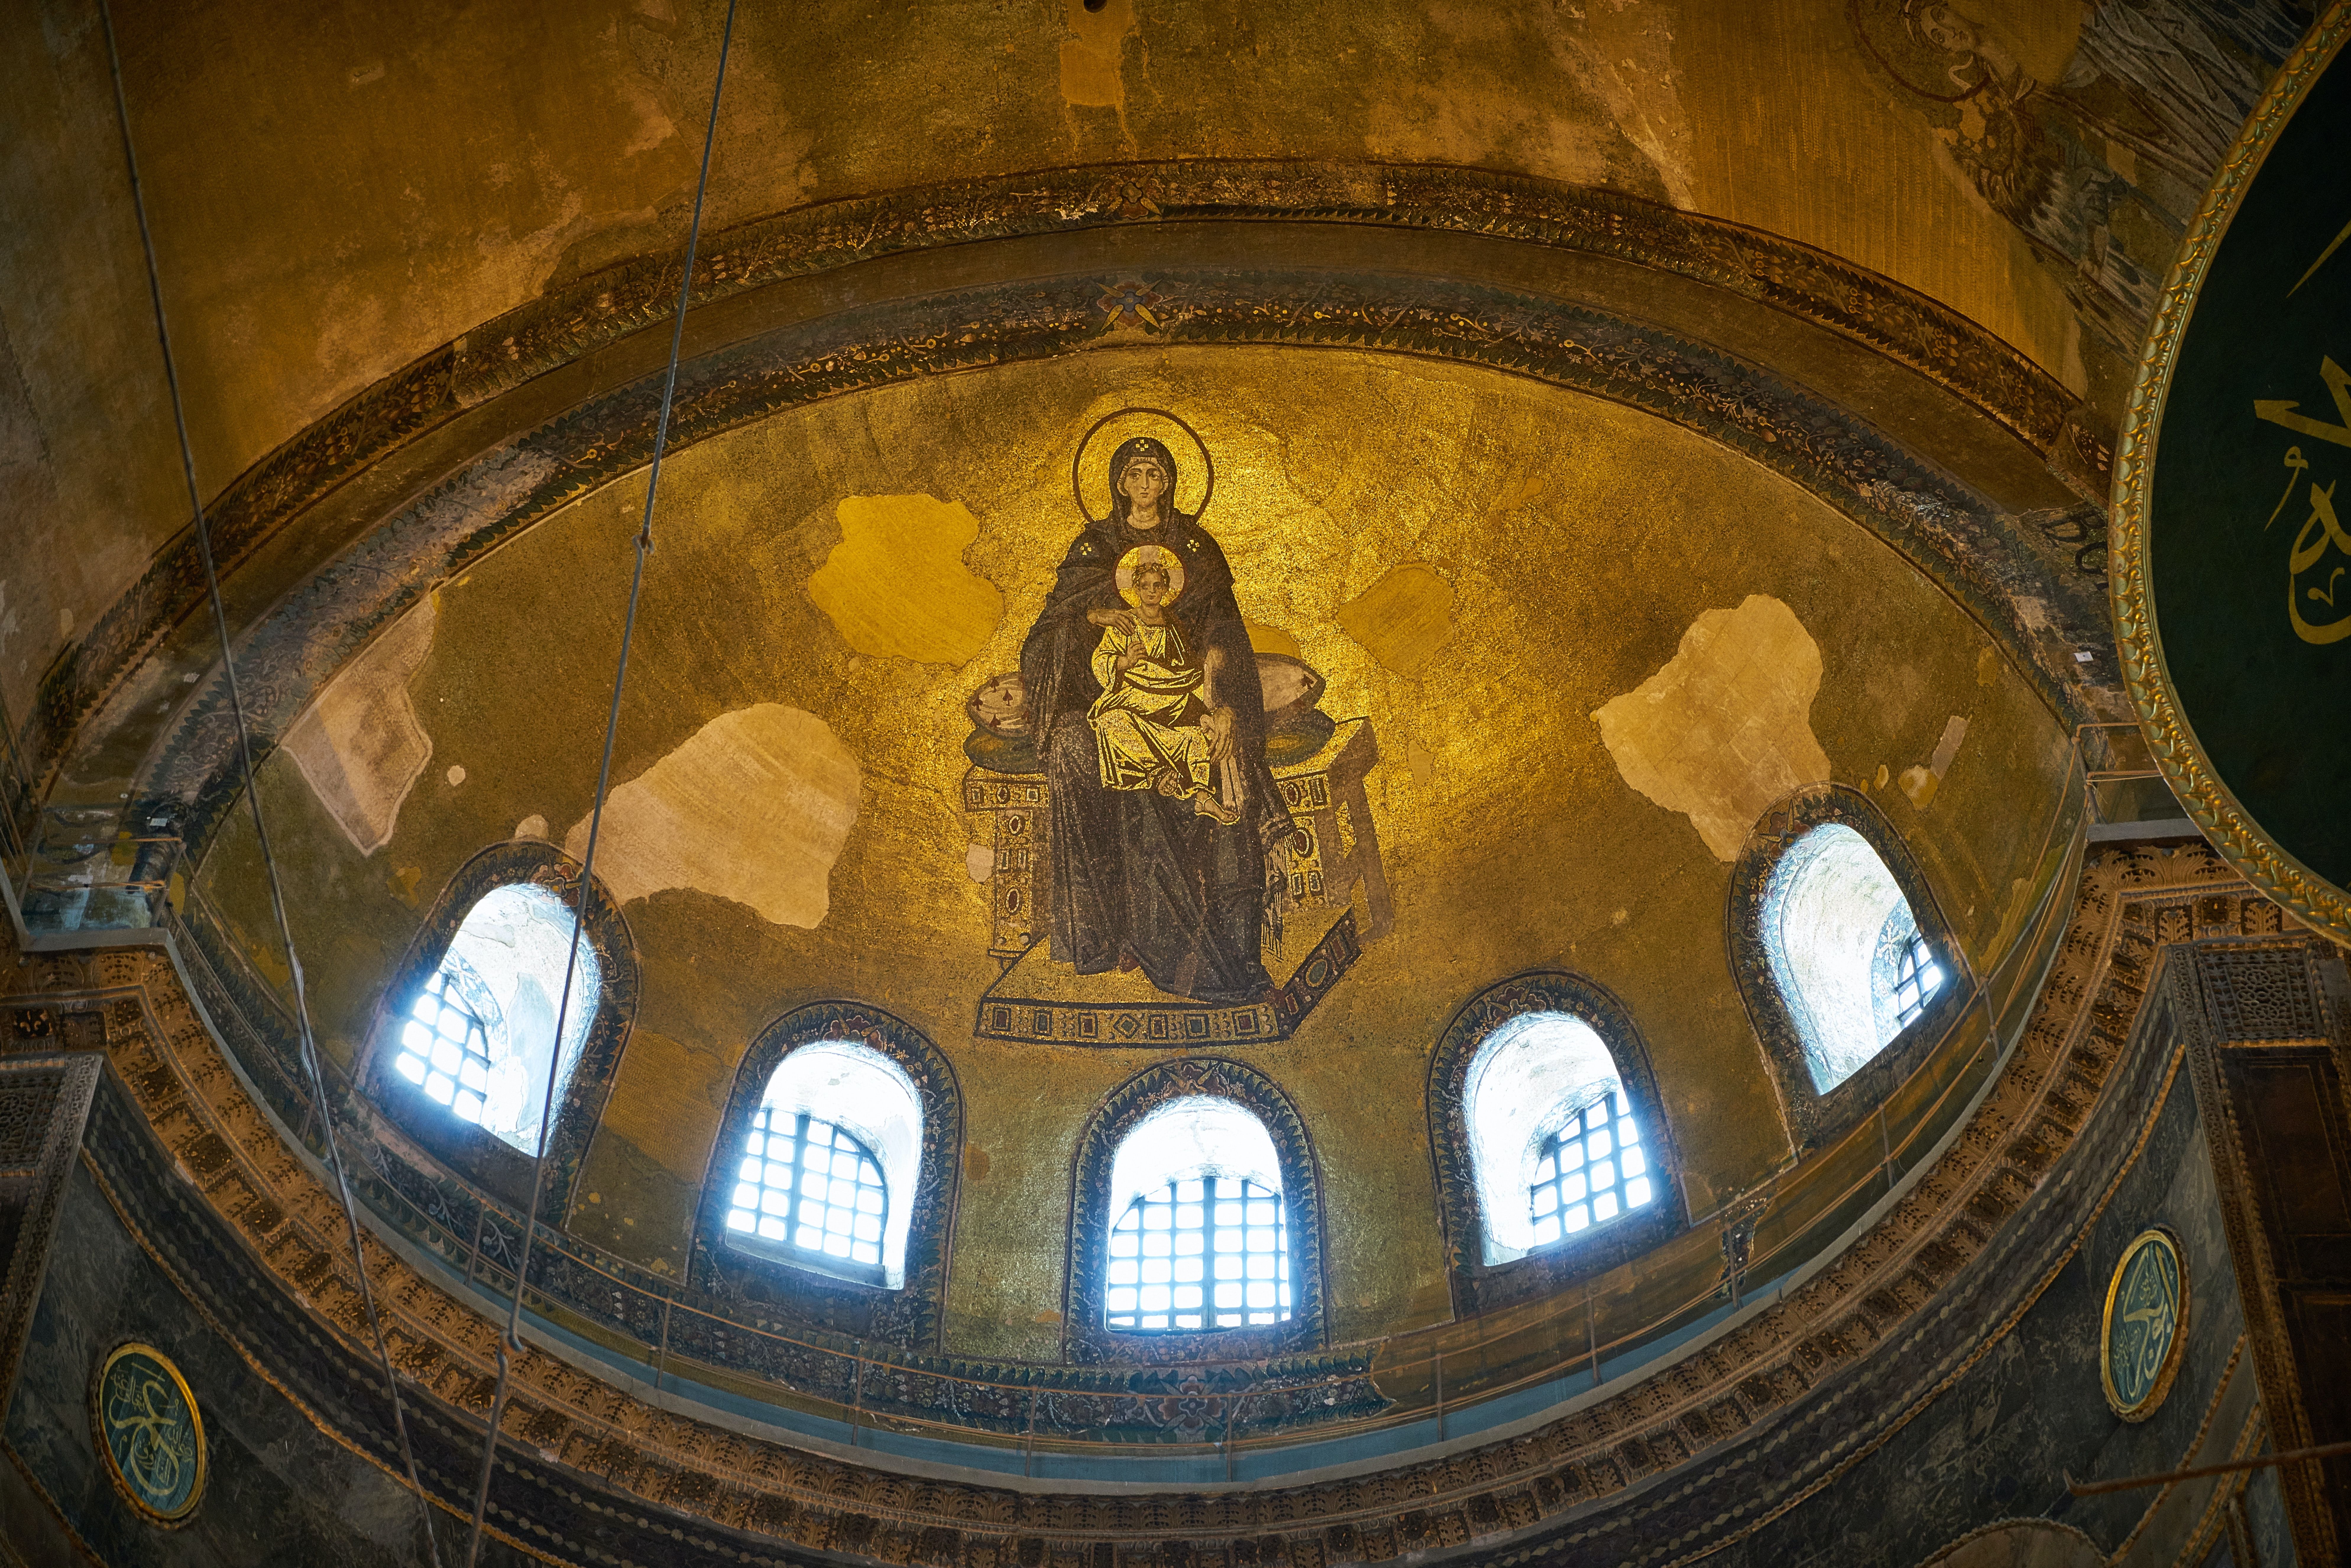 Age of enlightenment: the religious power of Hagia Sophia